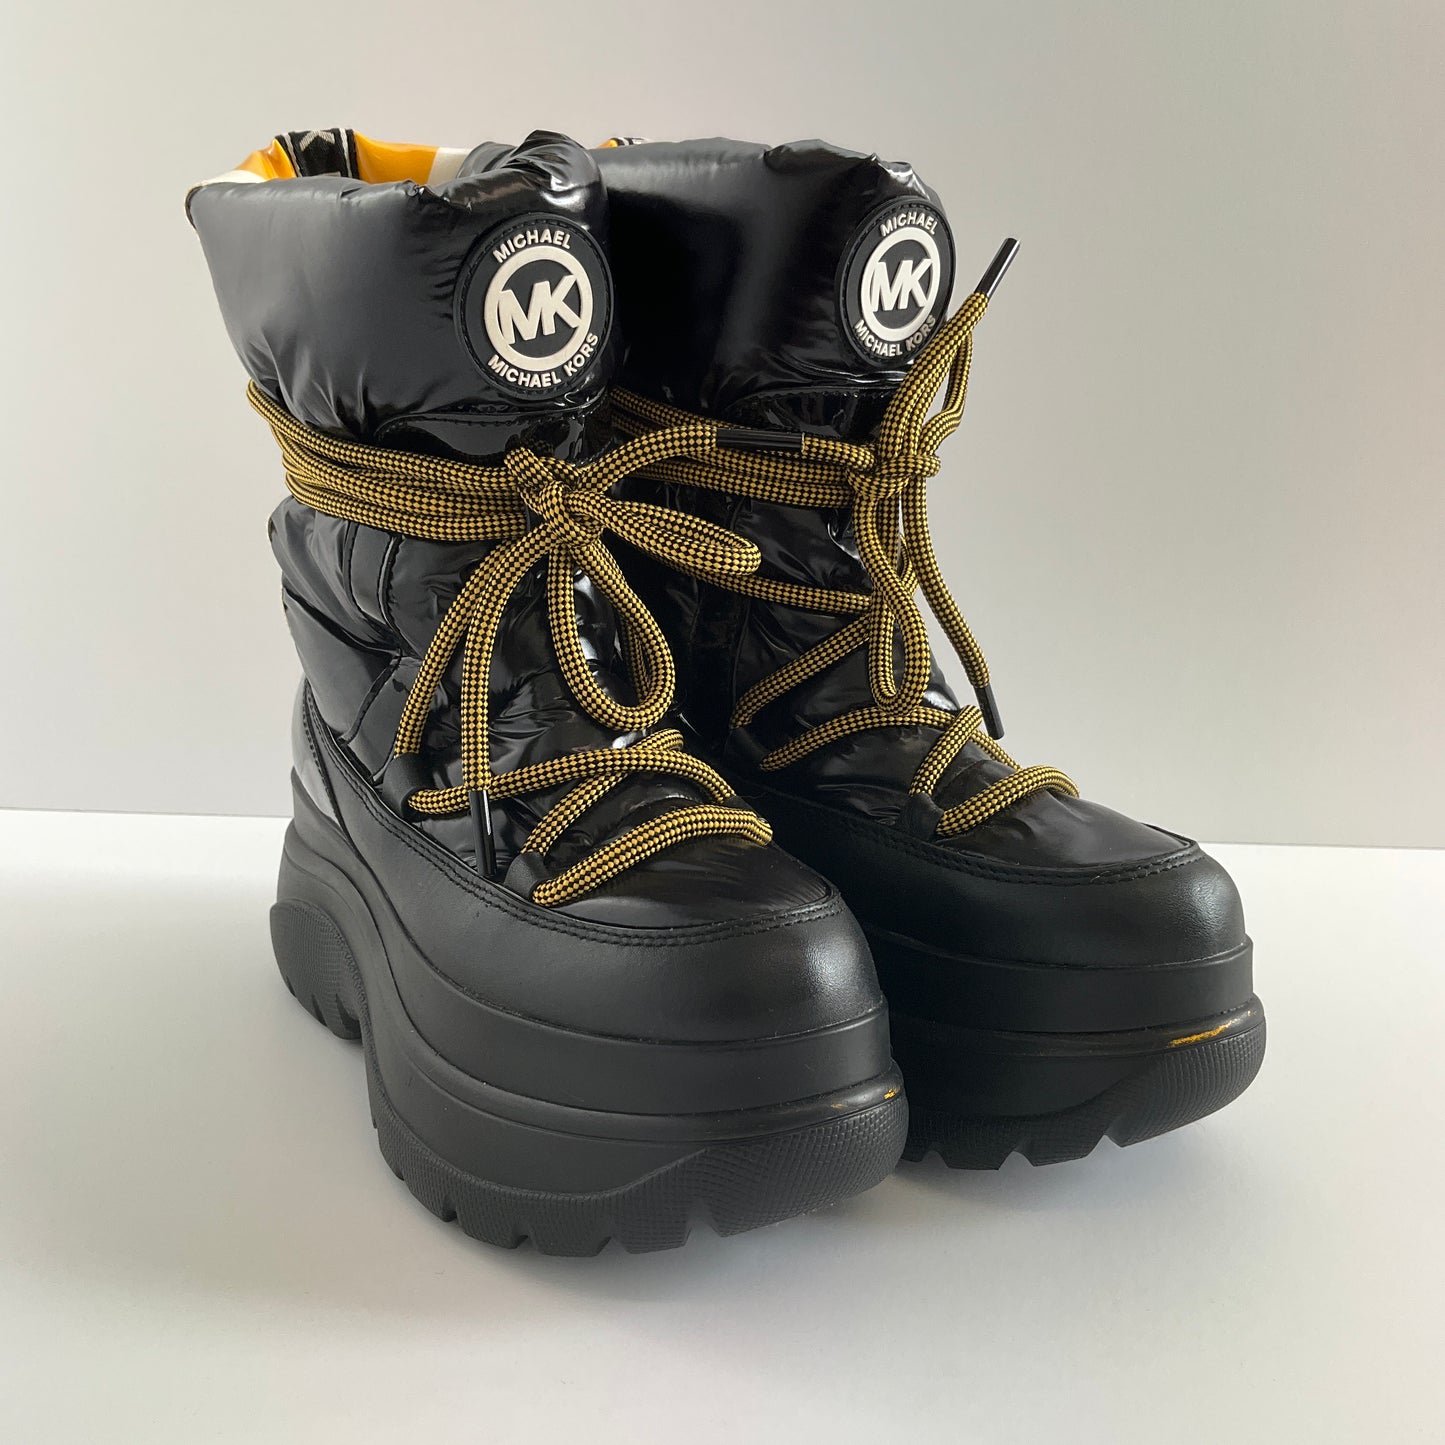 Michael Kors - Zadie Black/Yellow Boots - Size 7M